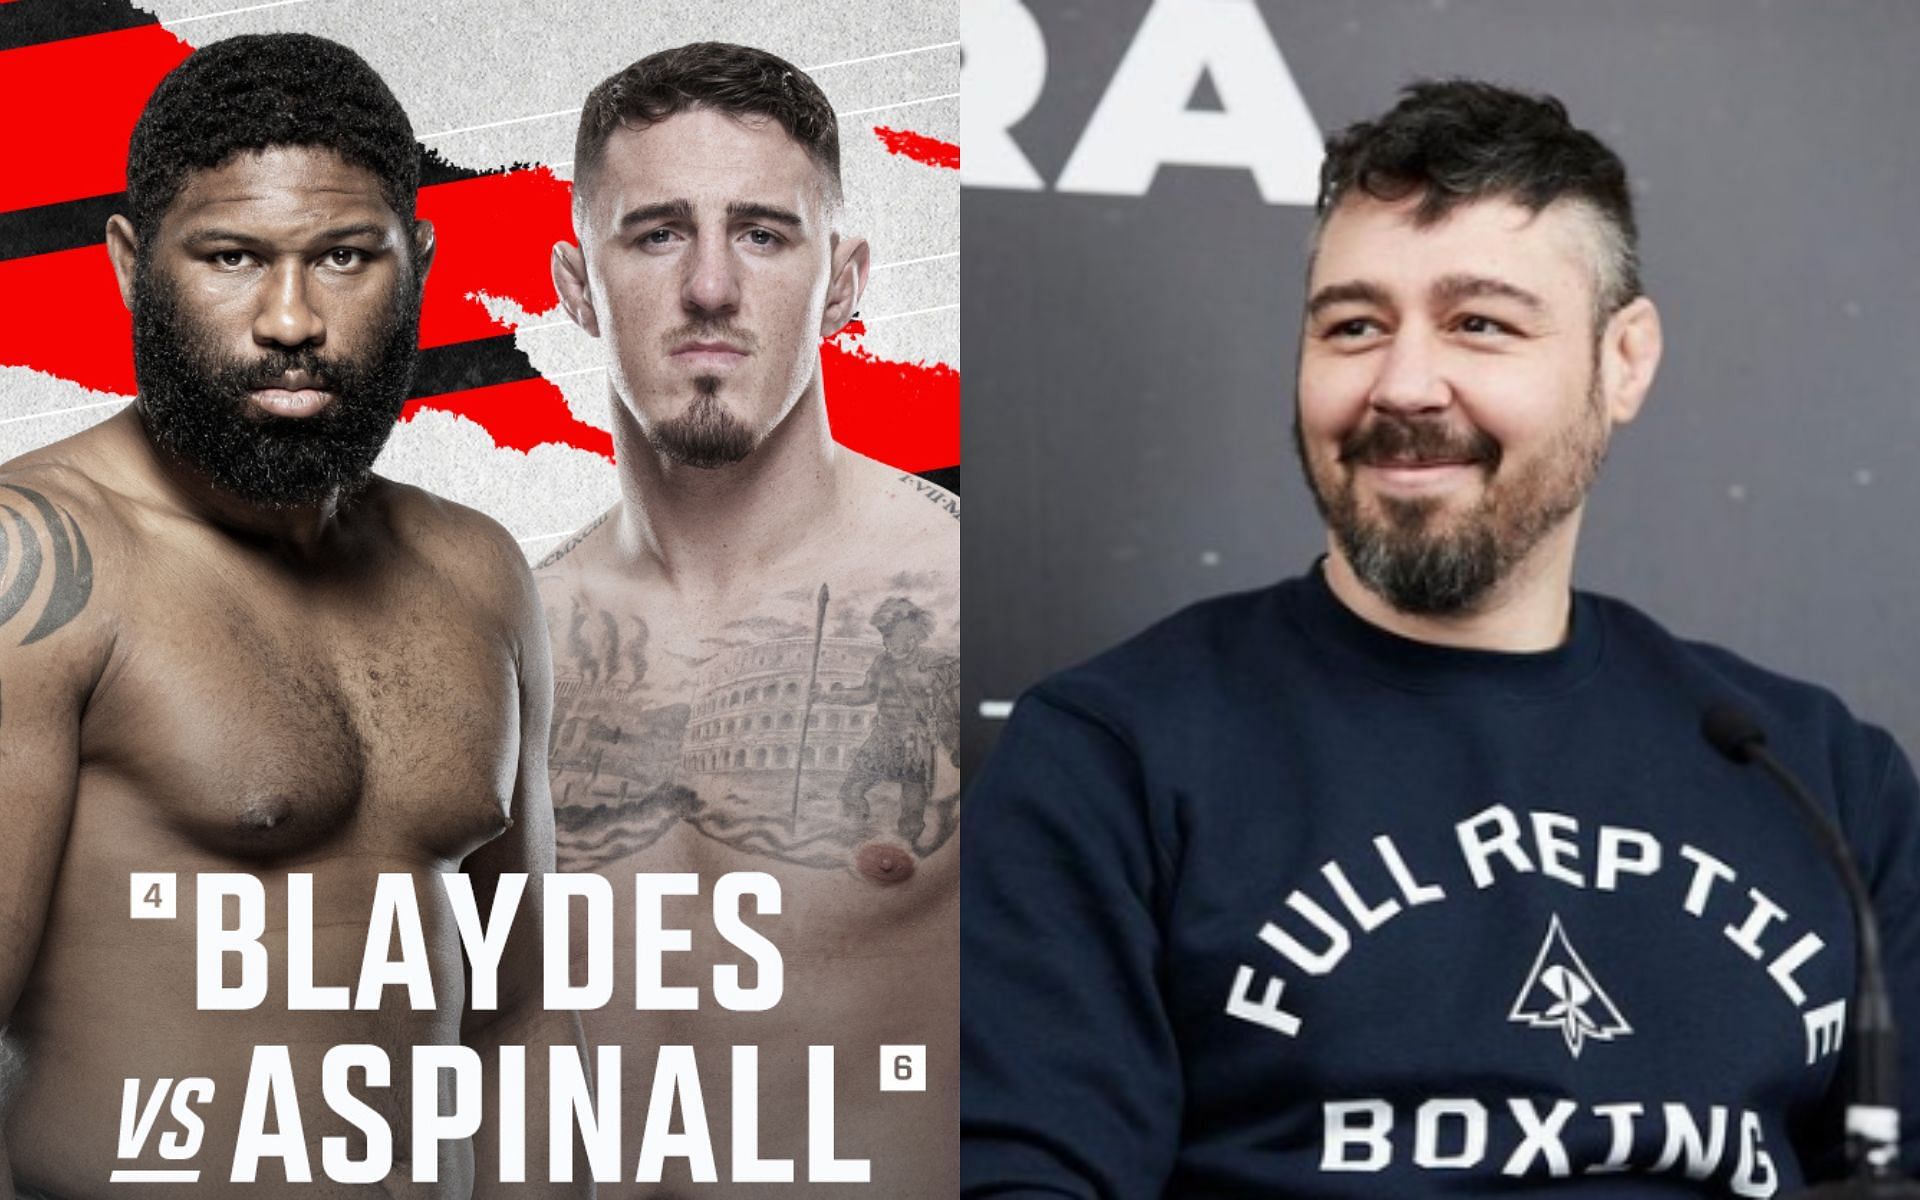 Tom Aspinall vs. Curtis Blaydes (left. Image credit: UFC on Facebook), Dan Hardy (right. Image credit: @danhardymma on Instagram)